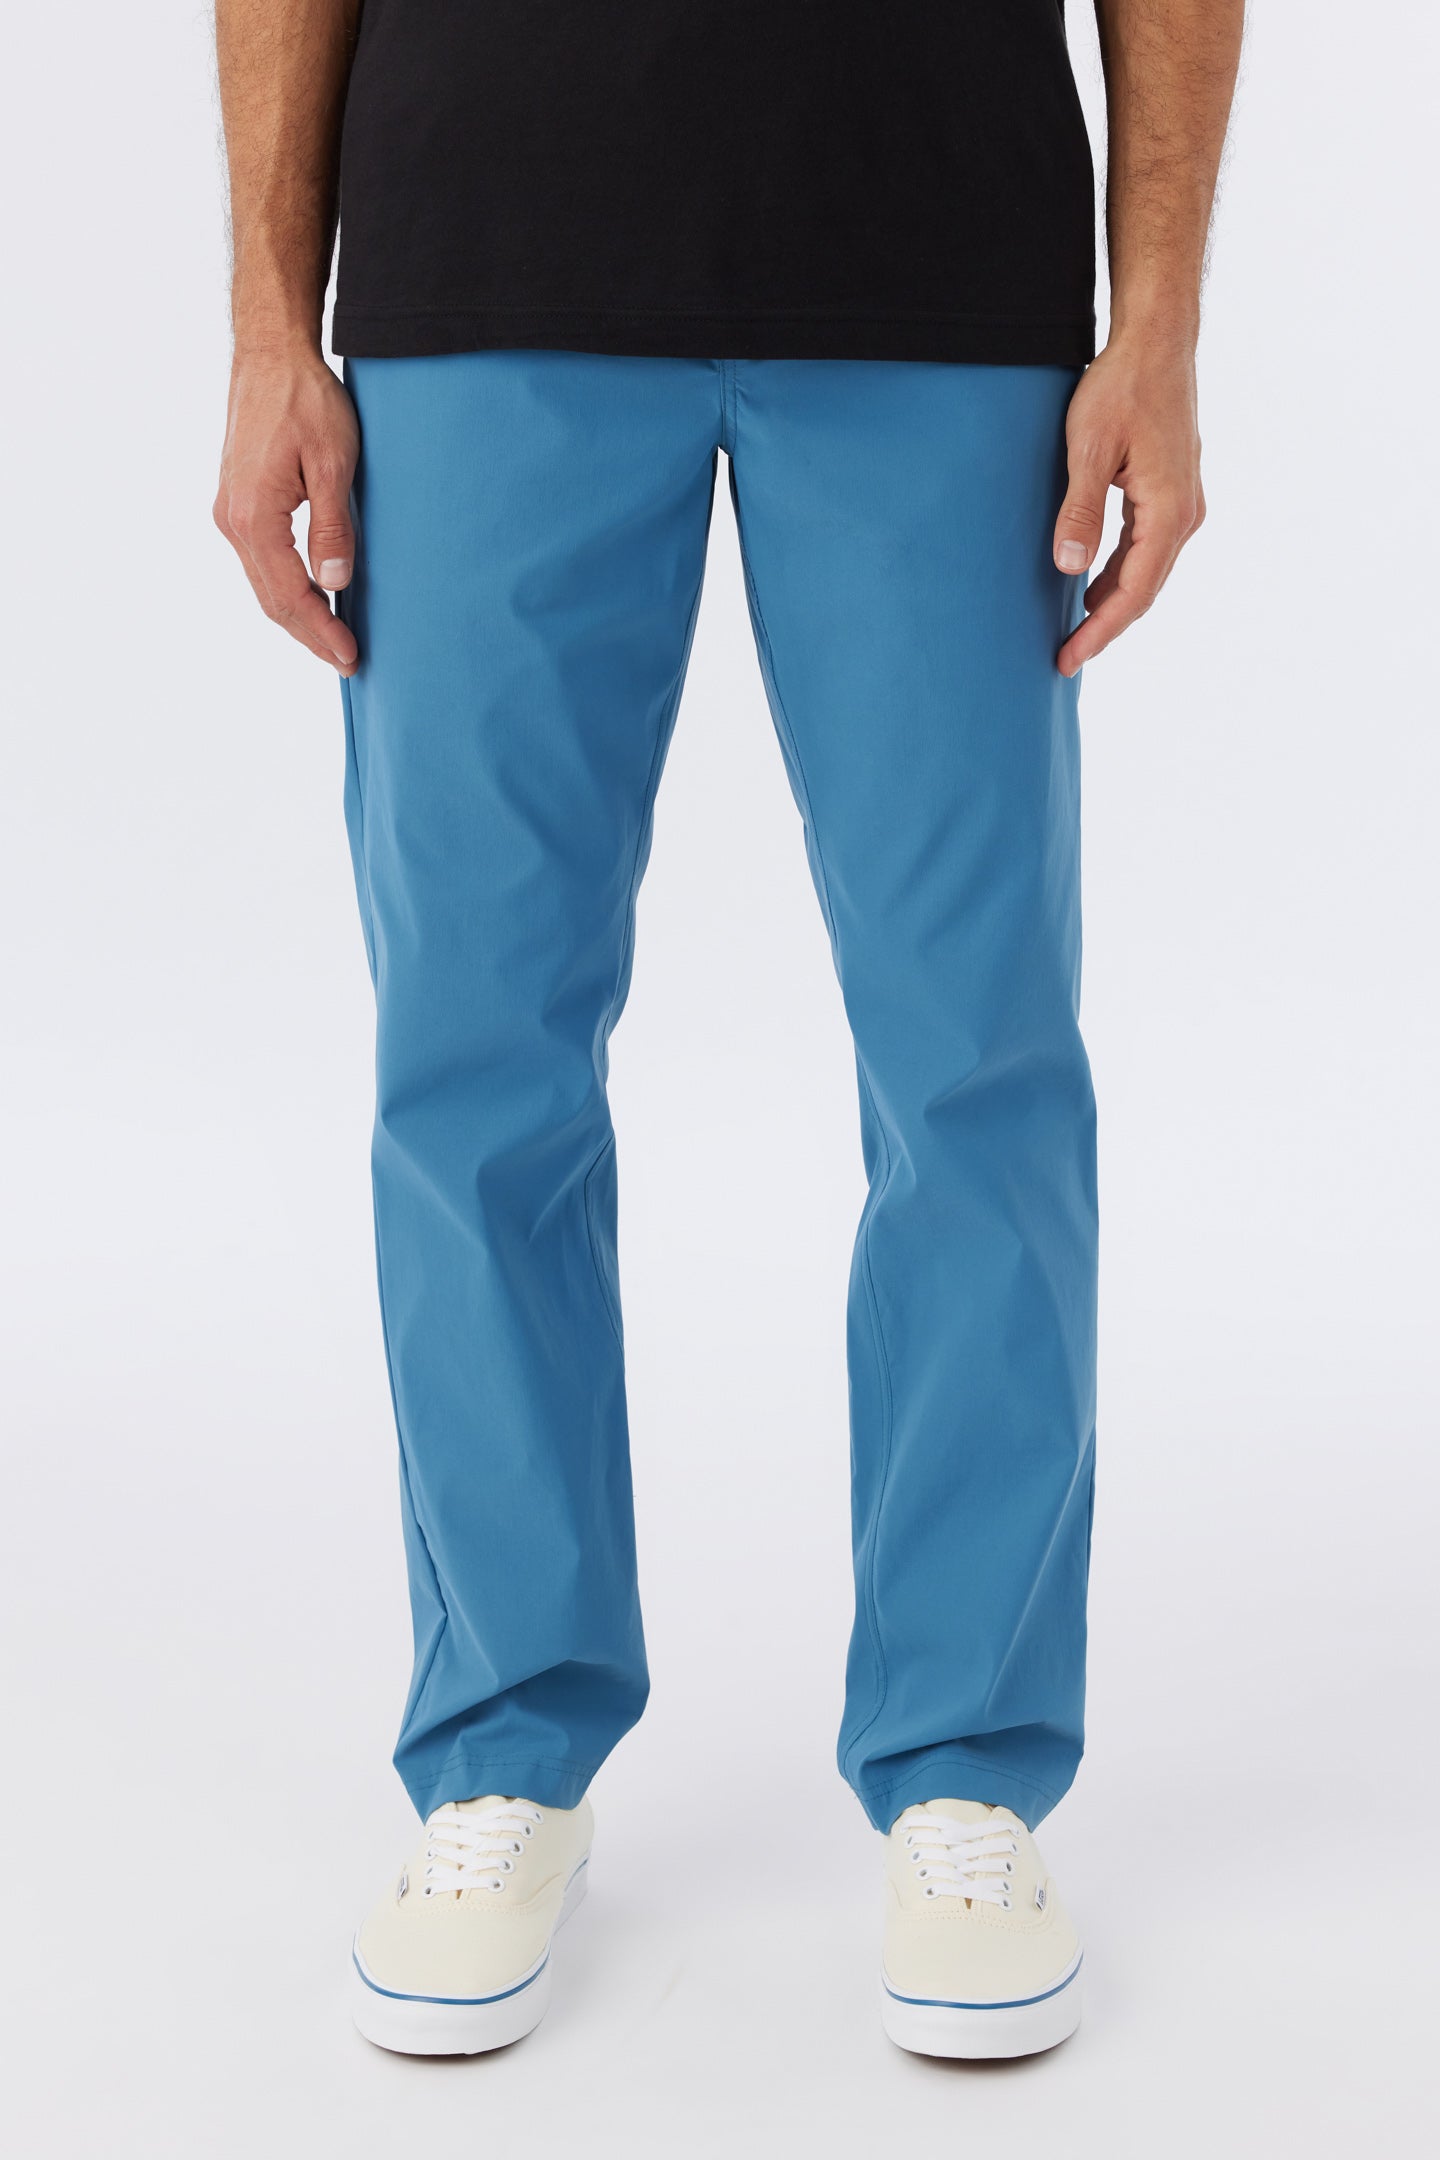 Trvlr Coast Hybrid Pants - Storm Blue | O'Neill